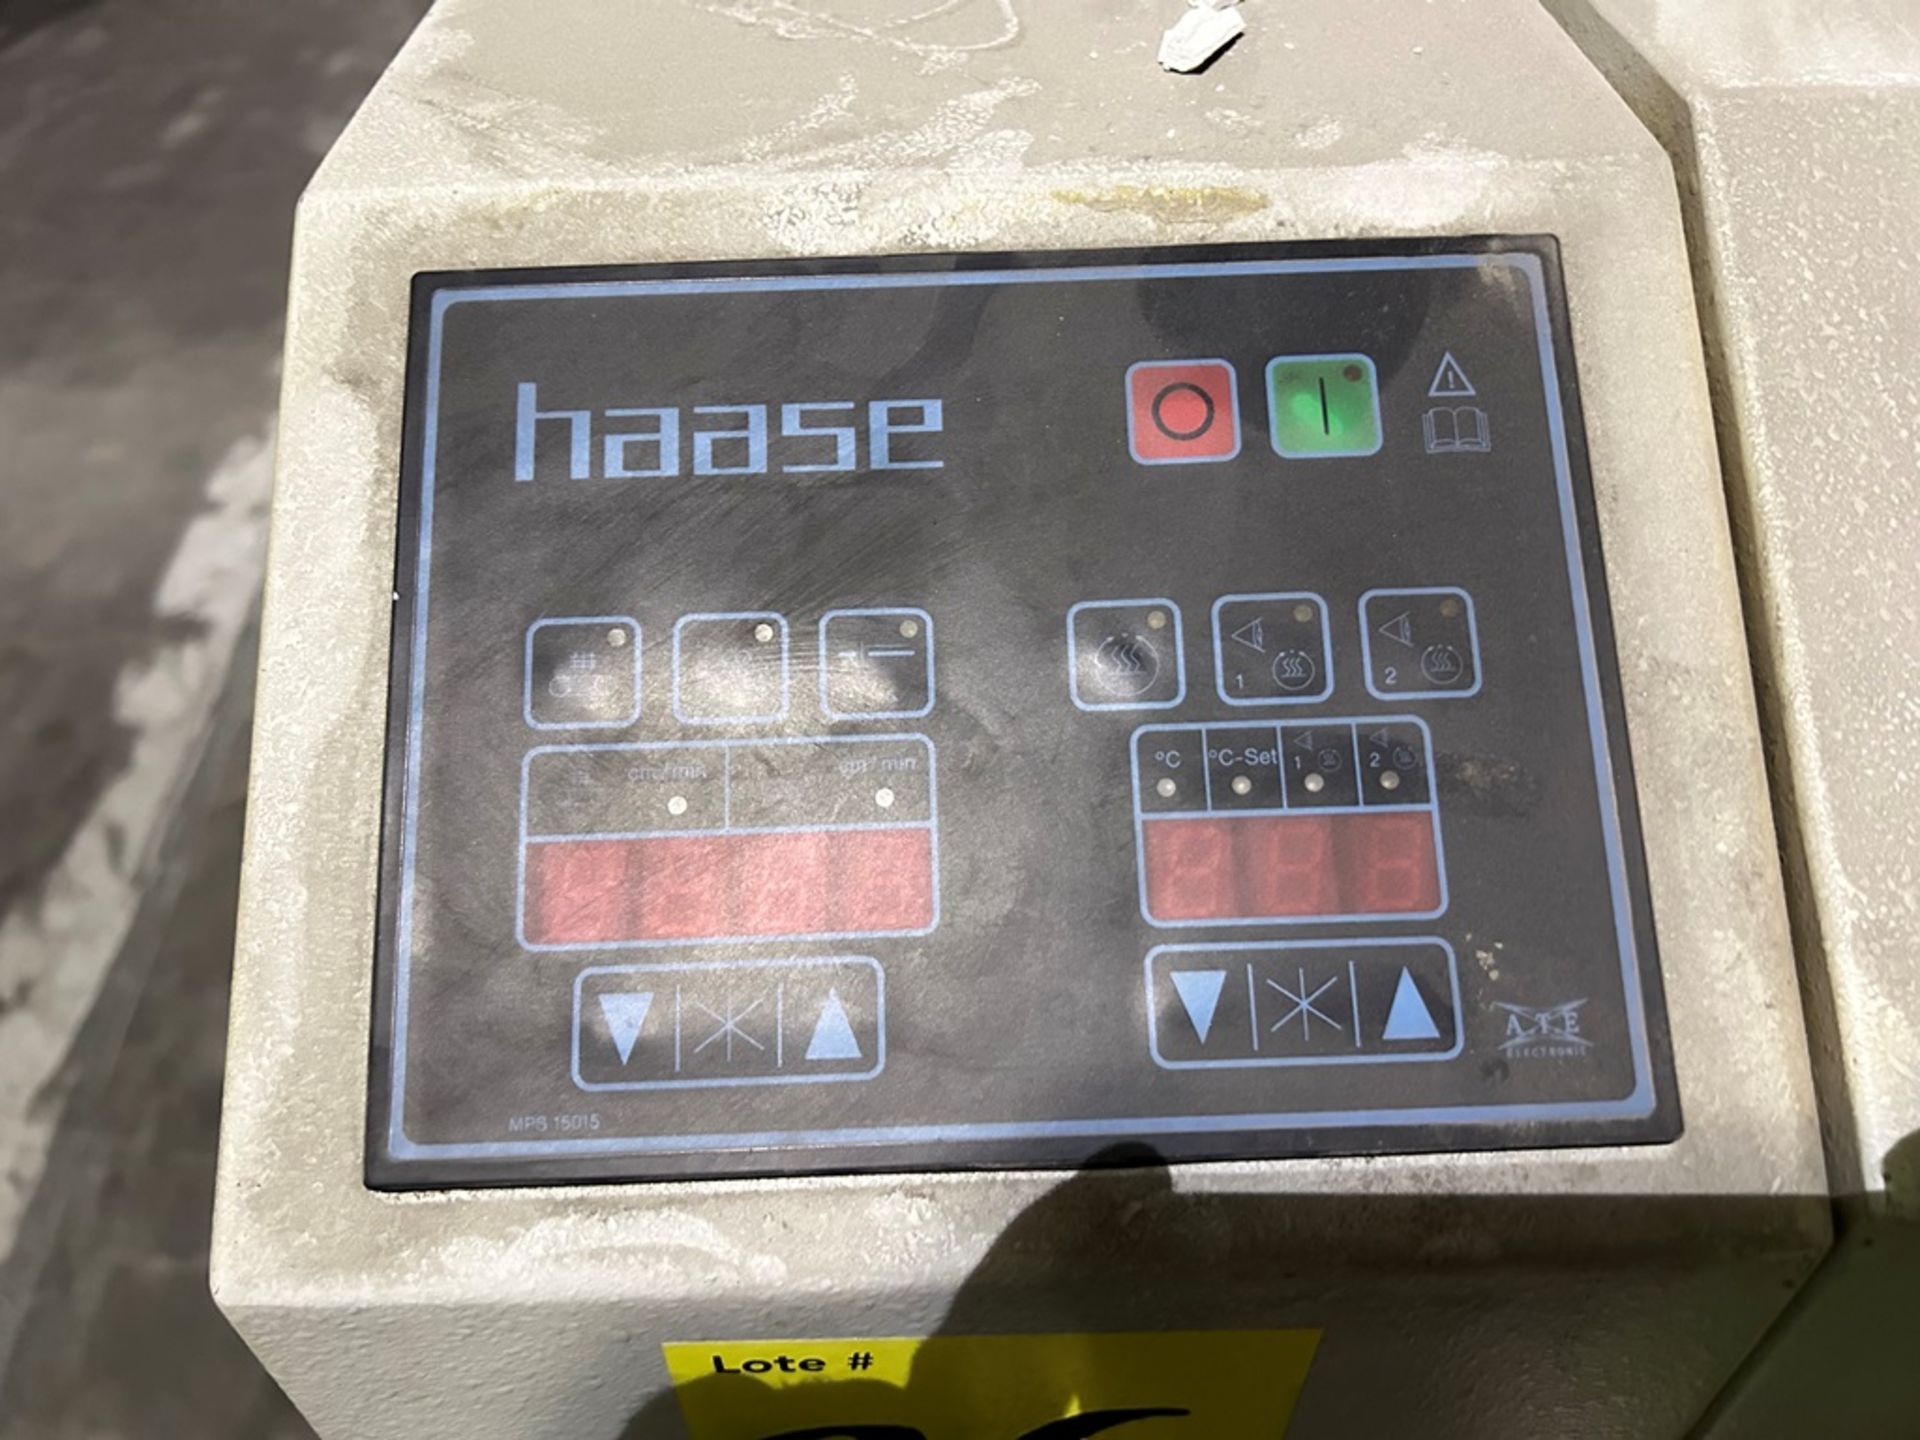 HAASE Plate Baking Machine, Model 0G15, Serial No. 3394, Year 2006, 400V, Heating capacity 14.4 kil - Image 5 of 7